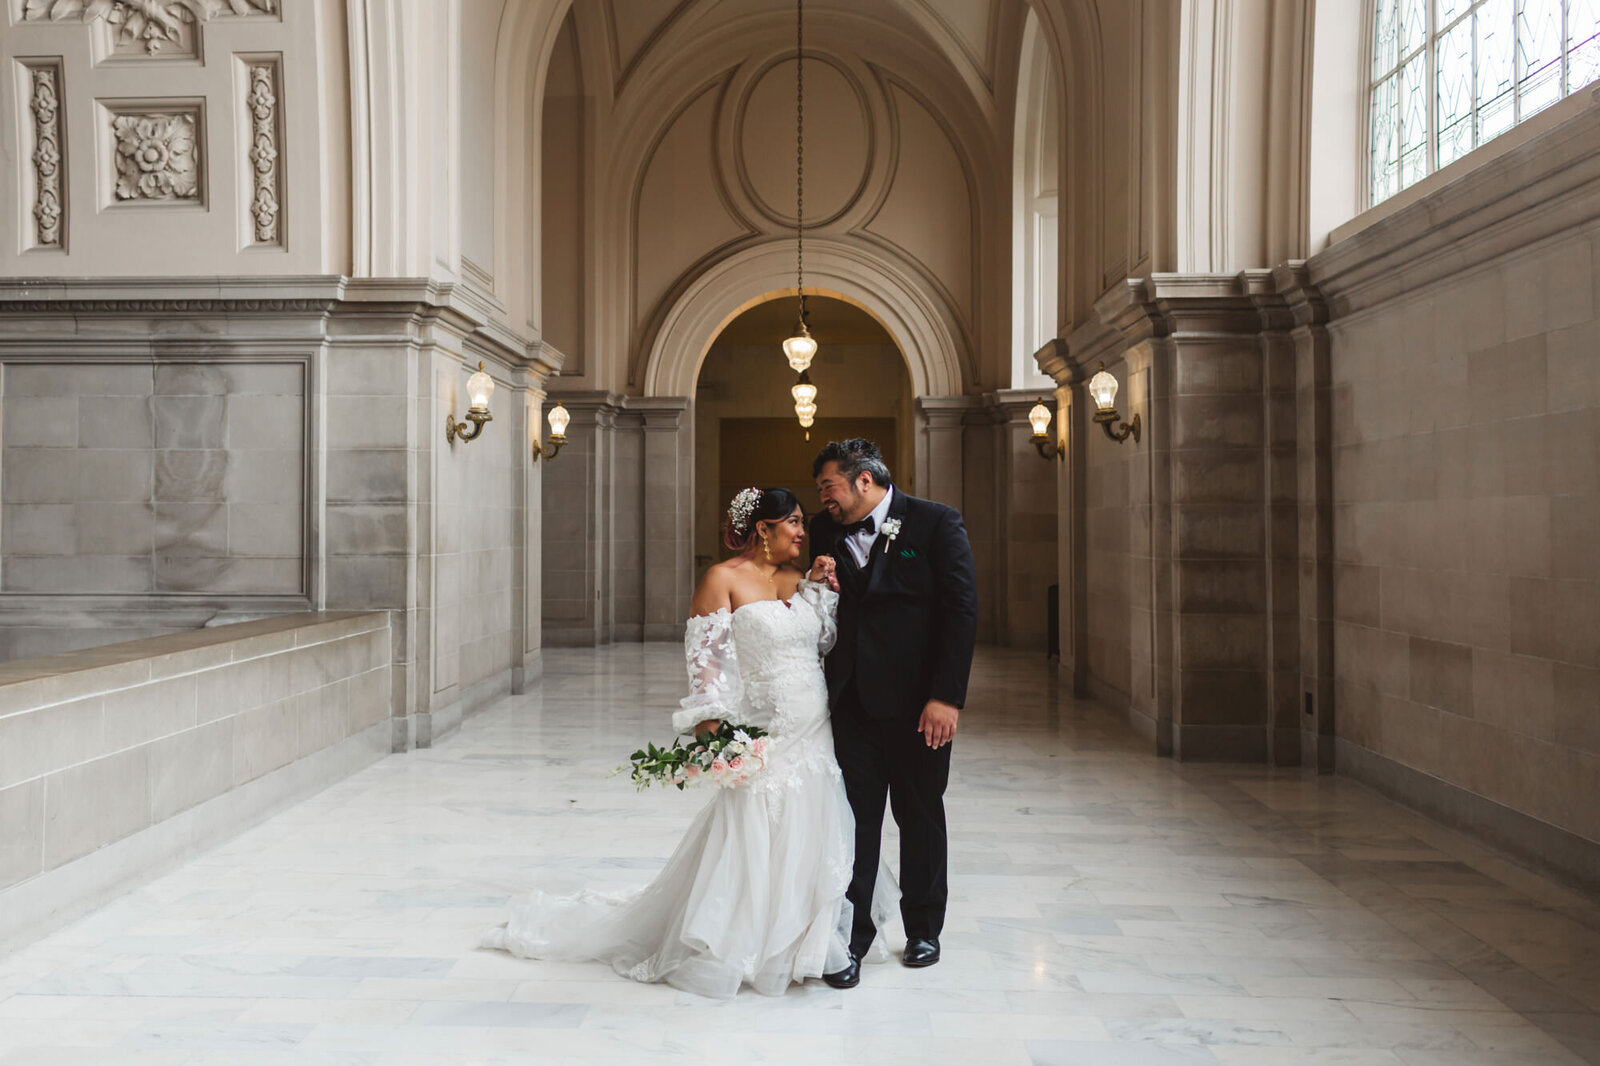 San Francisco City Hall wedding photos with bride and groom